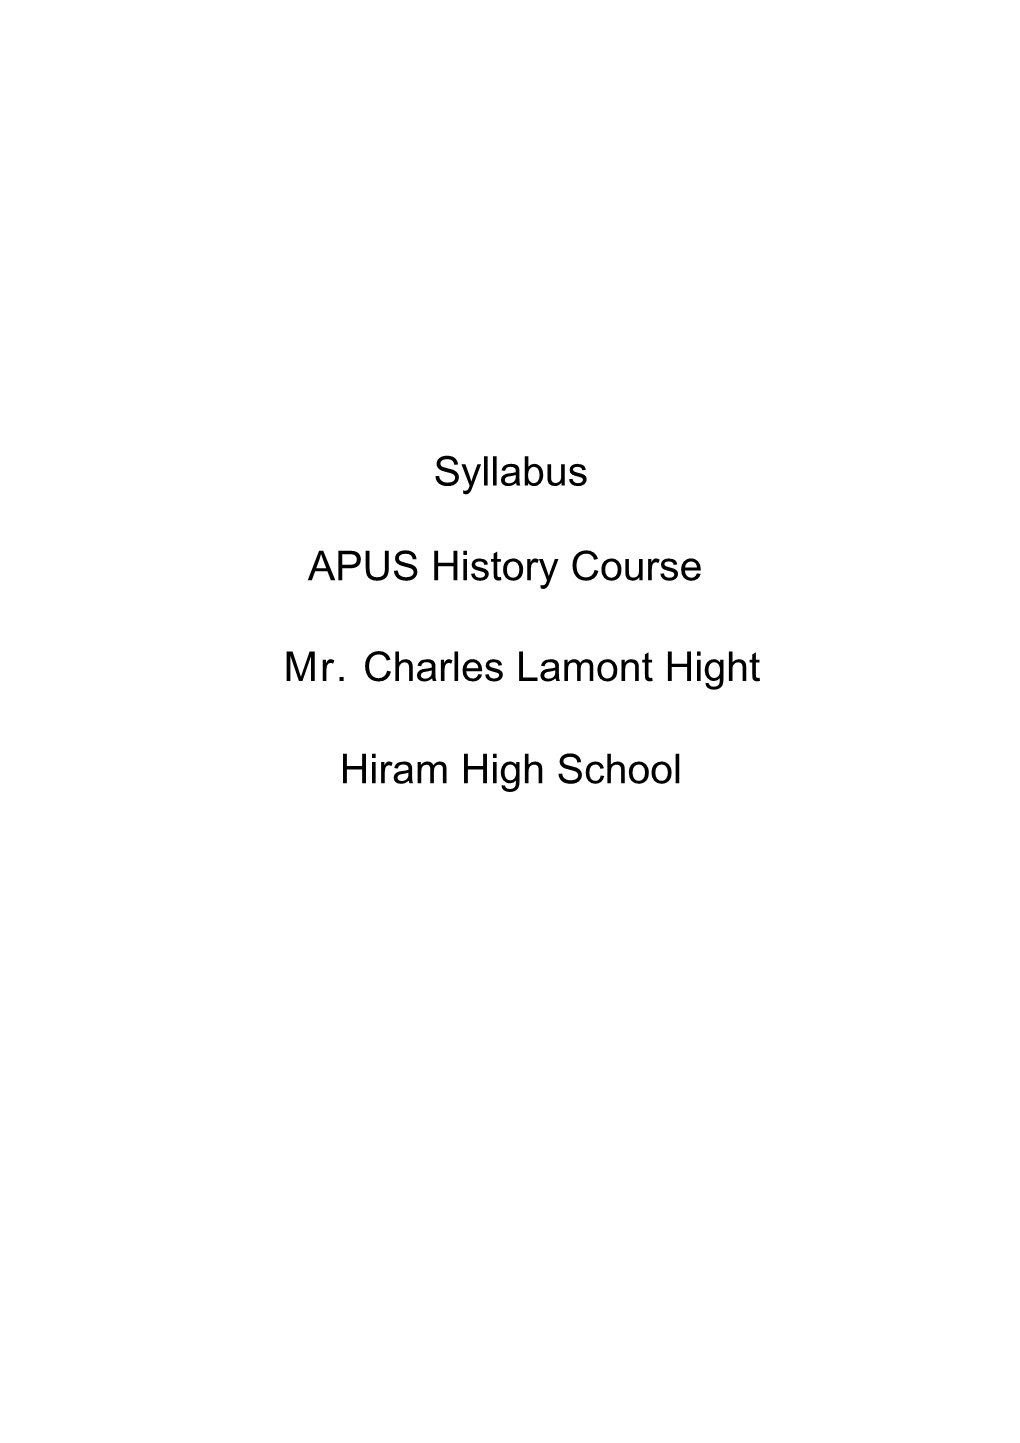 APUS History Course